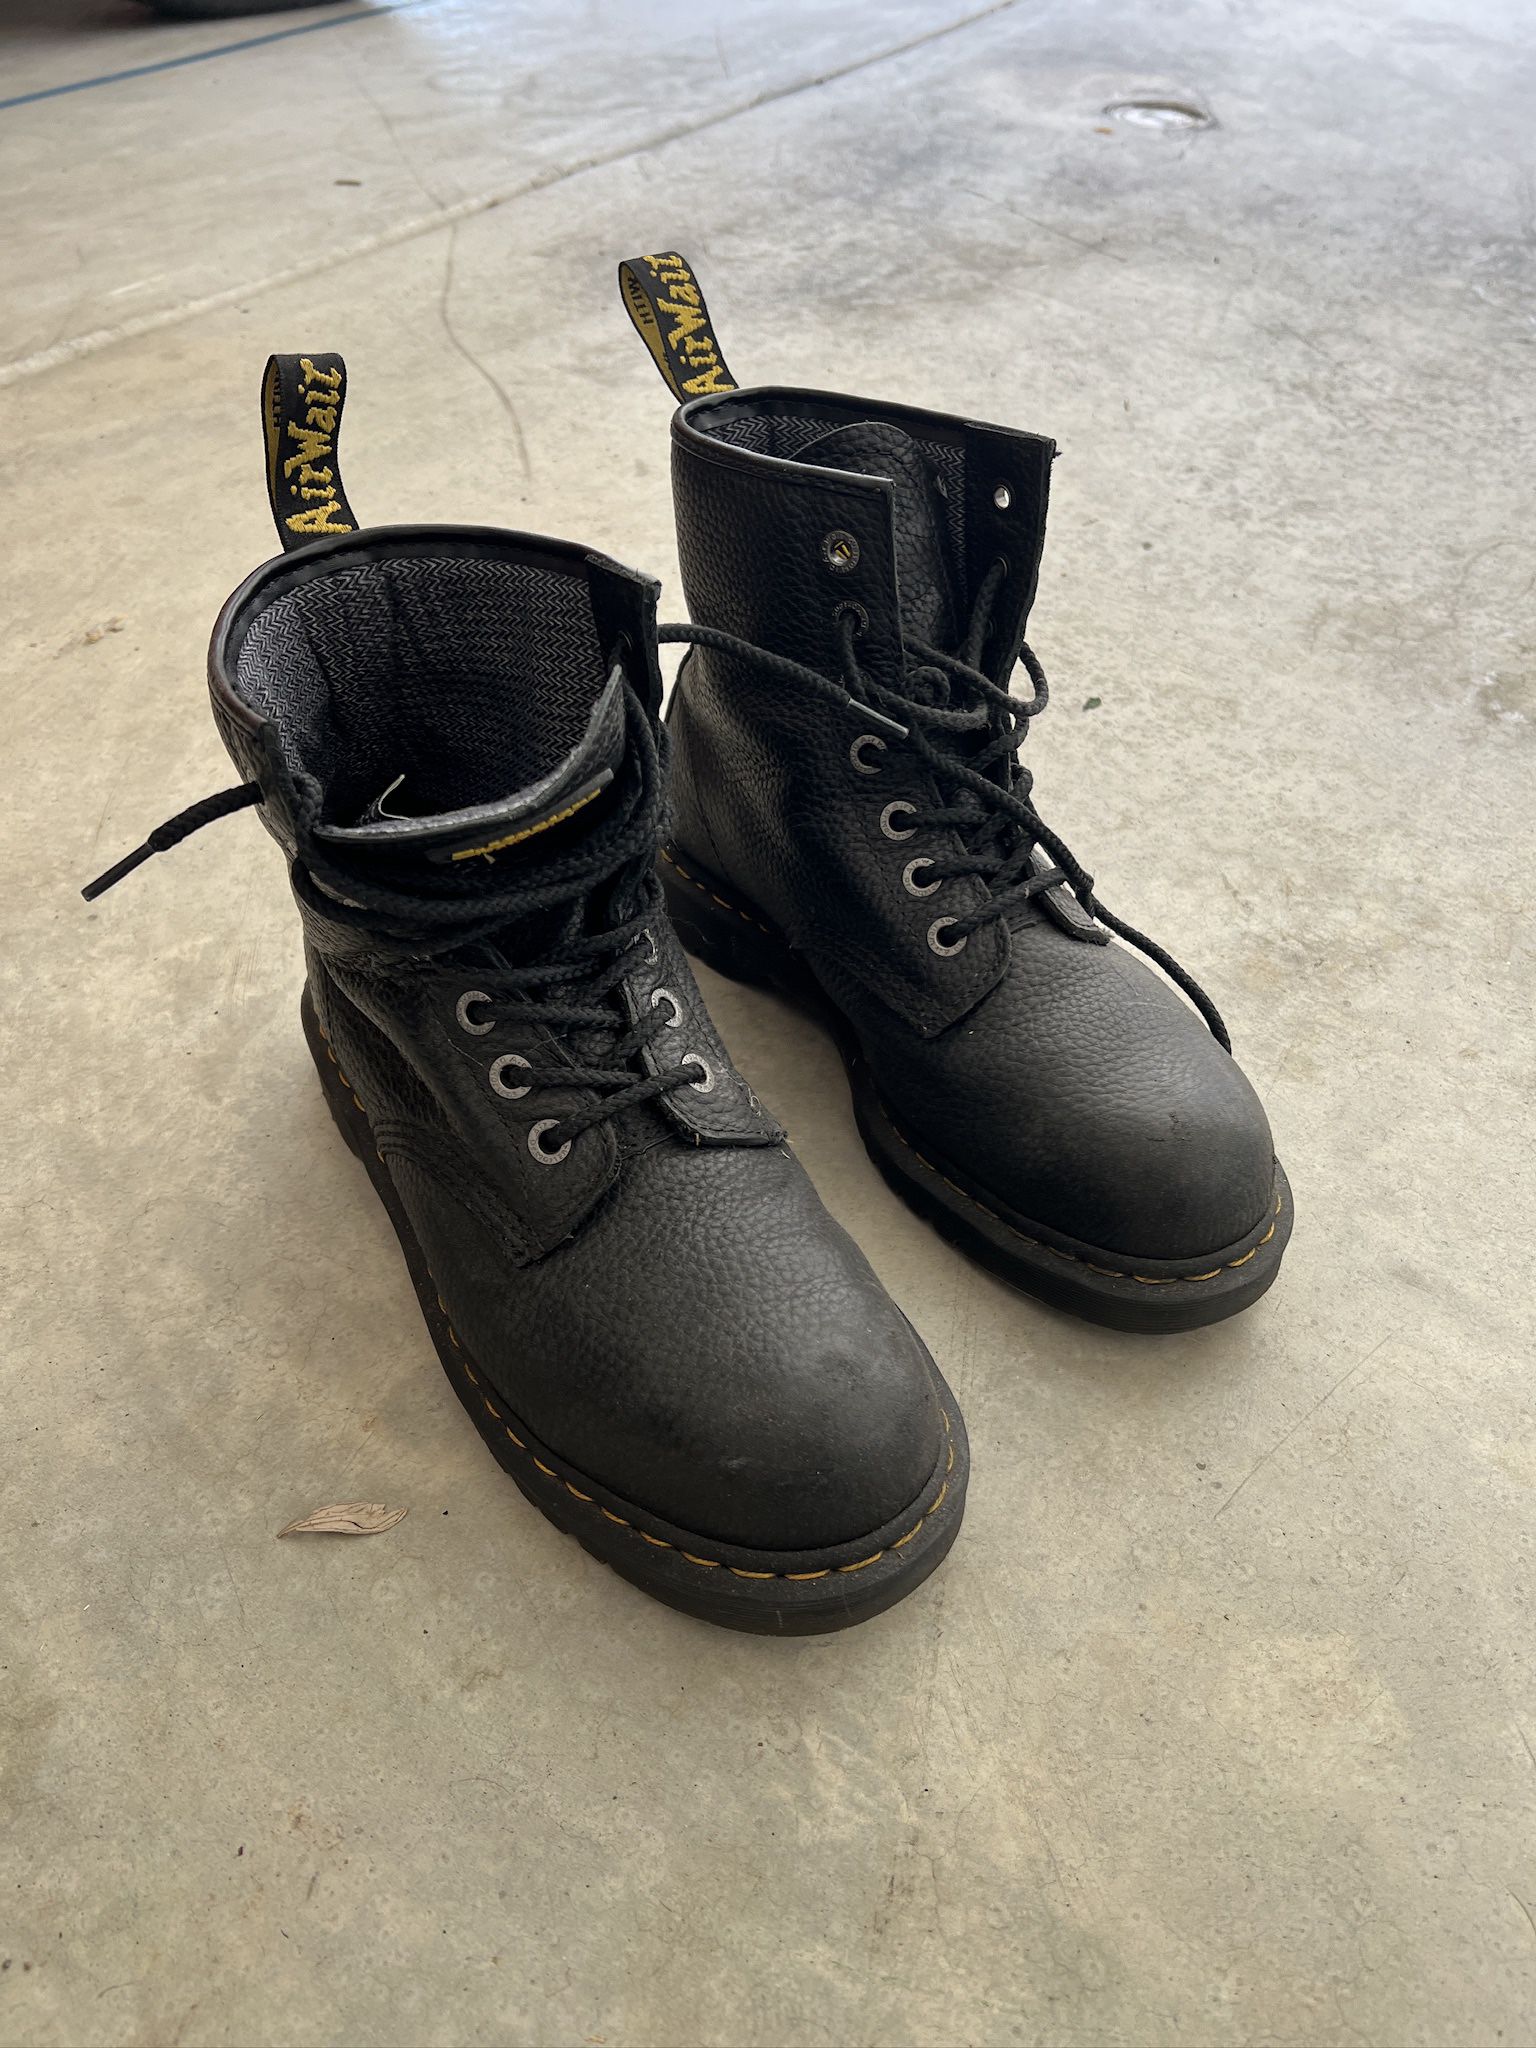 Gently Worn Doc Martin Steel Toe Work Boots Men’s Size 10